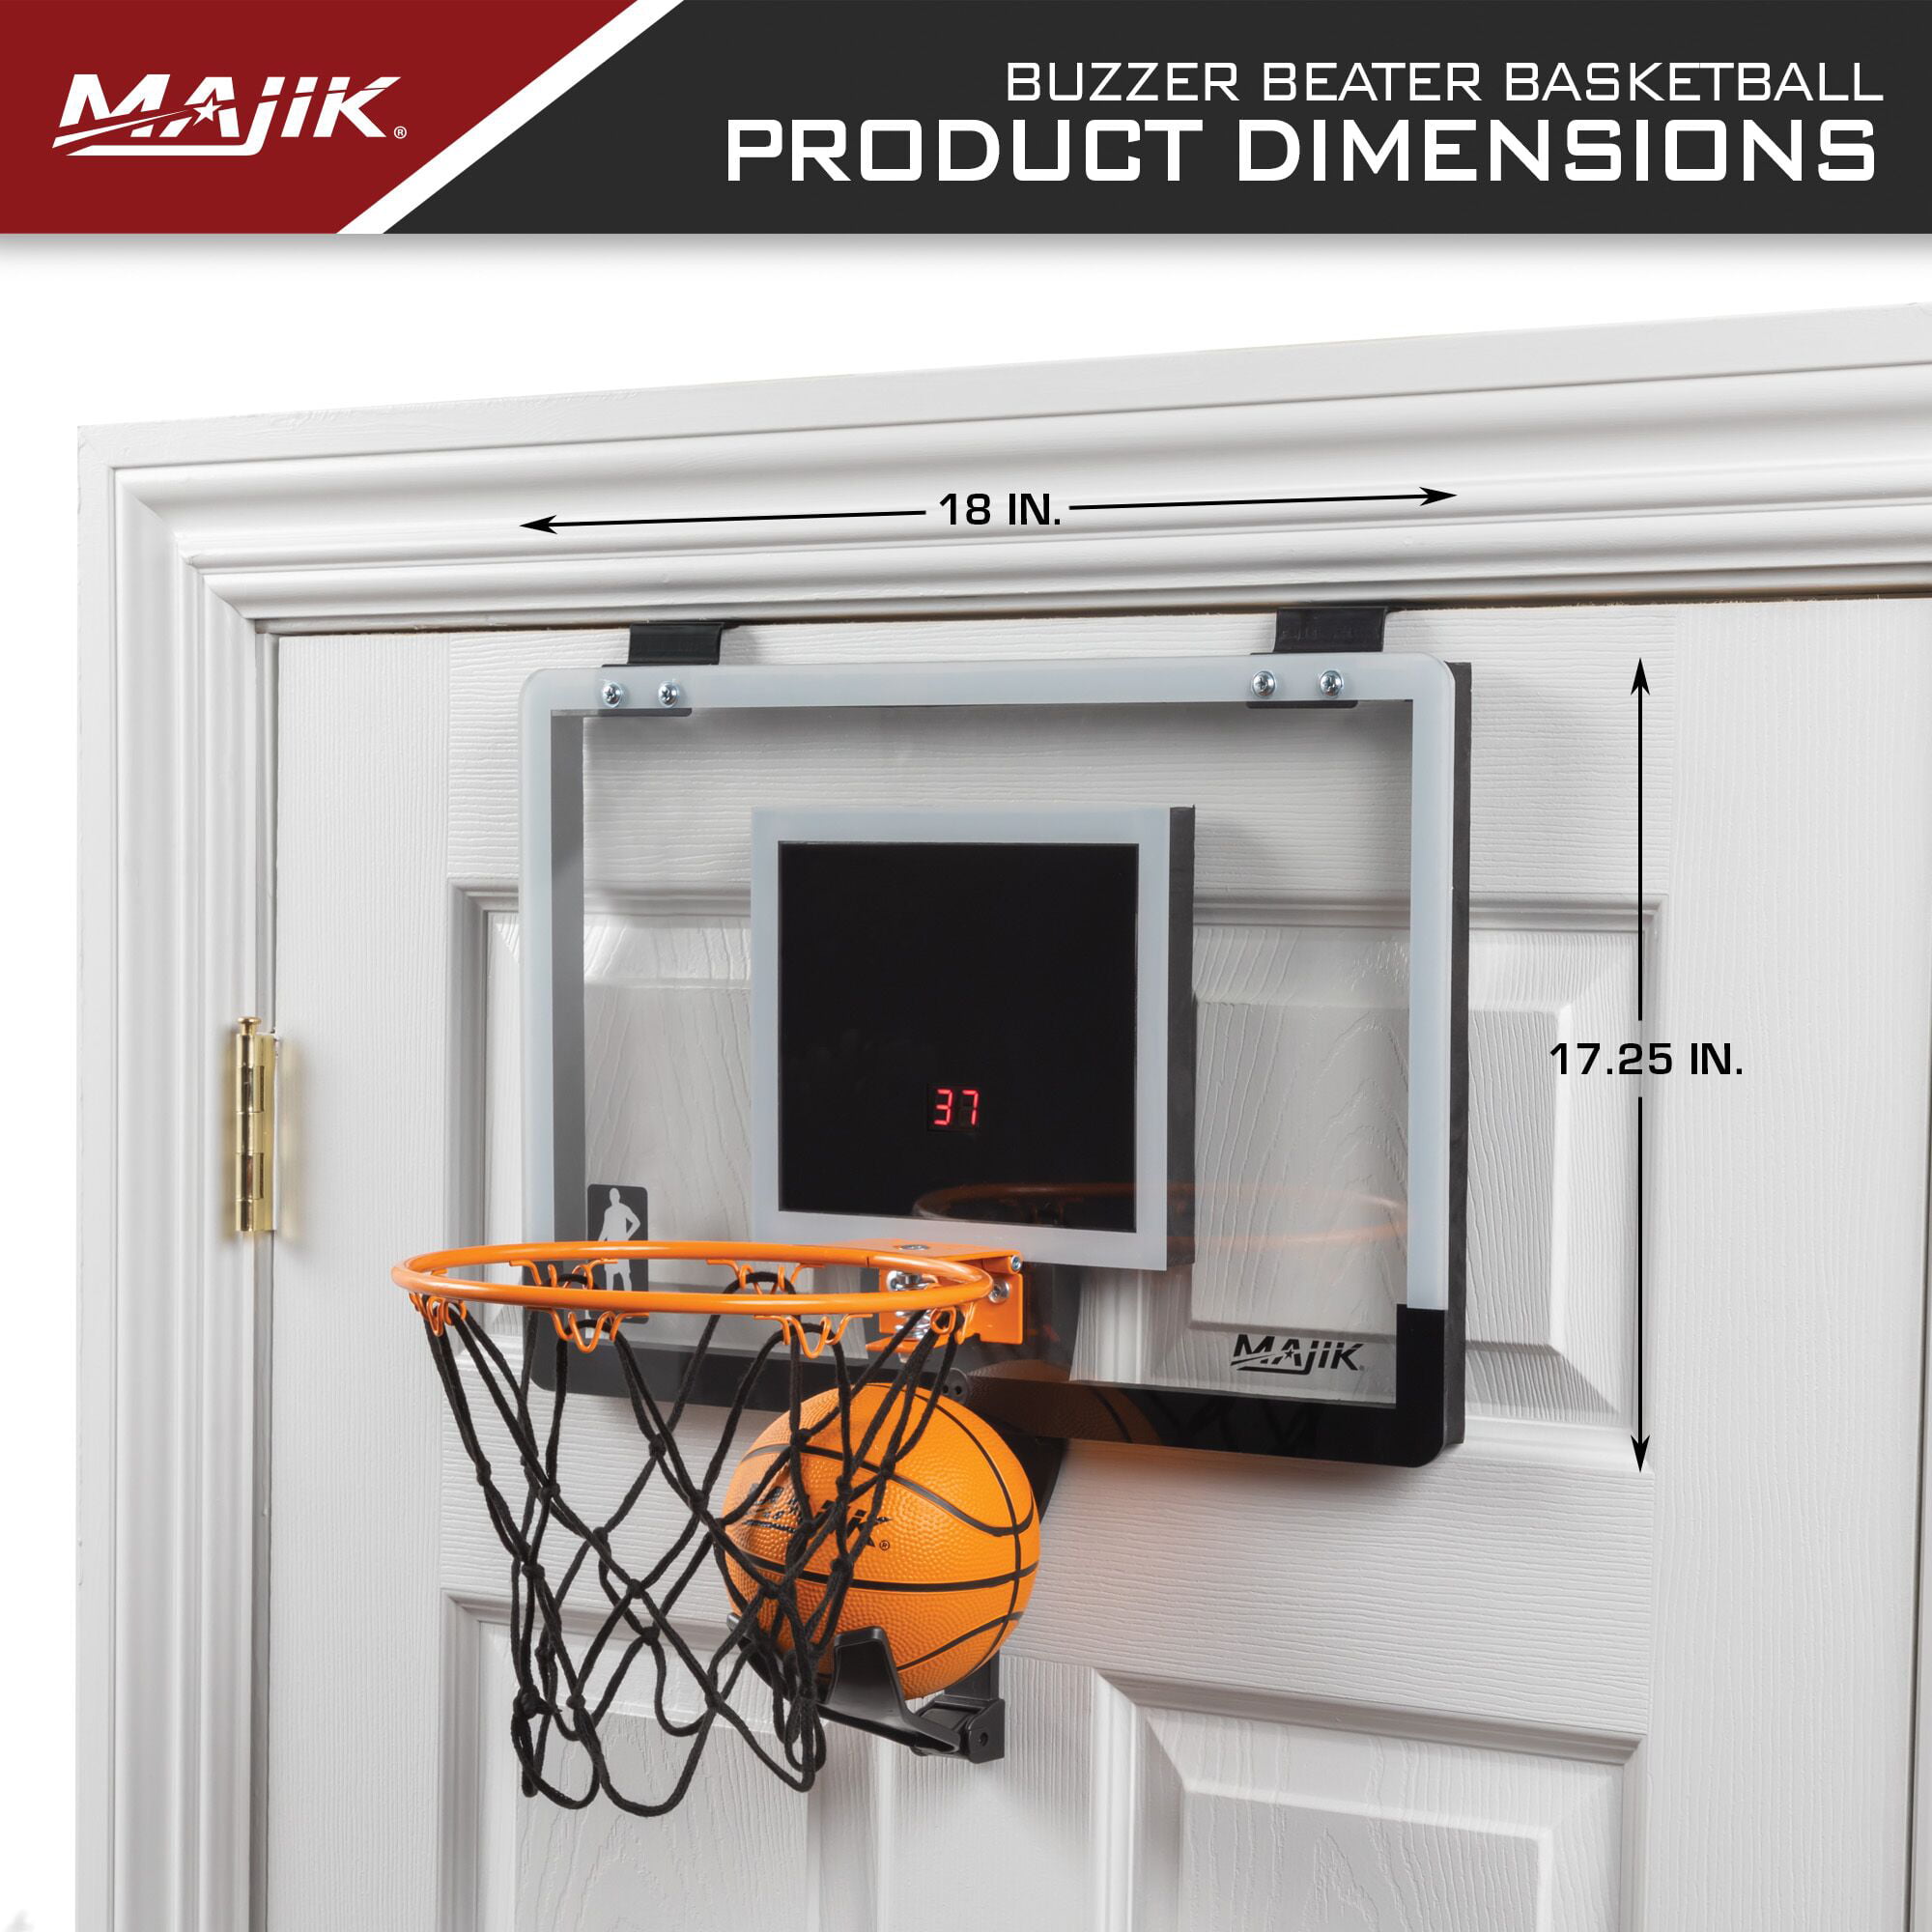 Pop-A-Shot Foldable Hanging Slam Dunk Over The Door Mini Arcade Basketball Hoop - 18 in